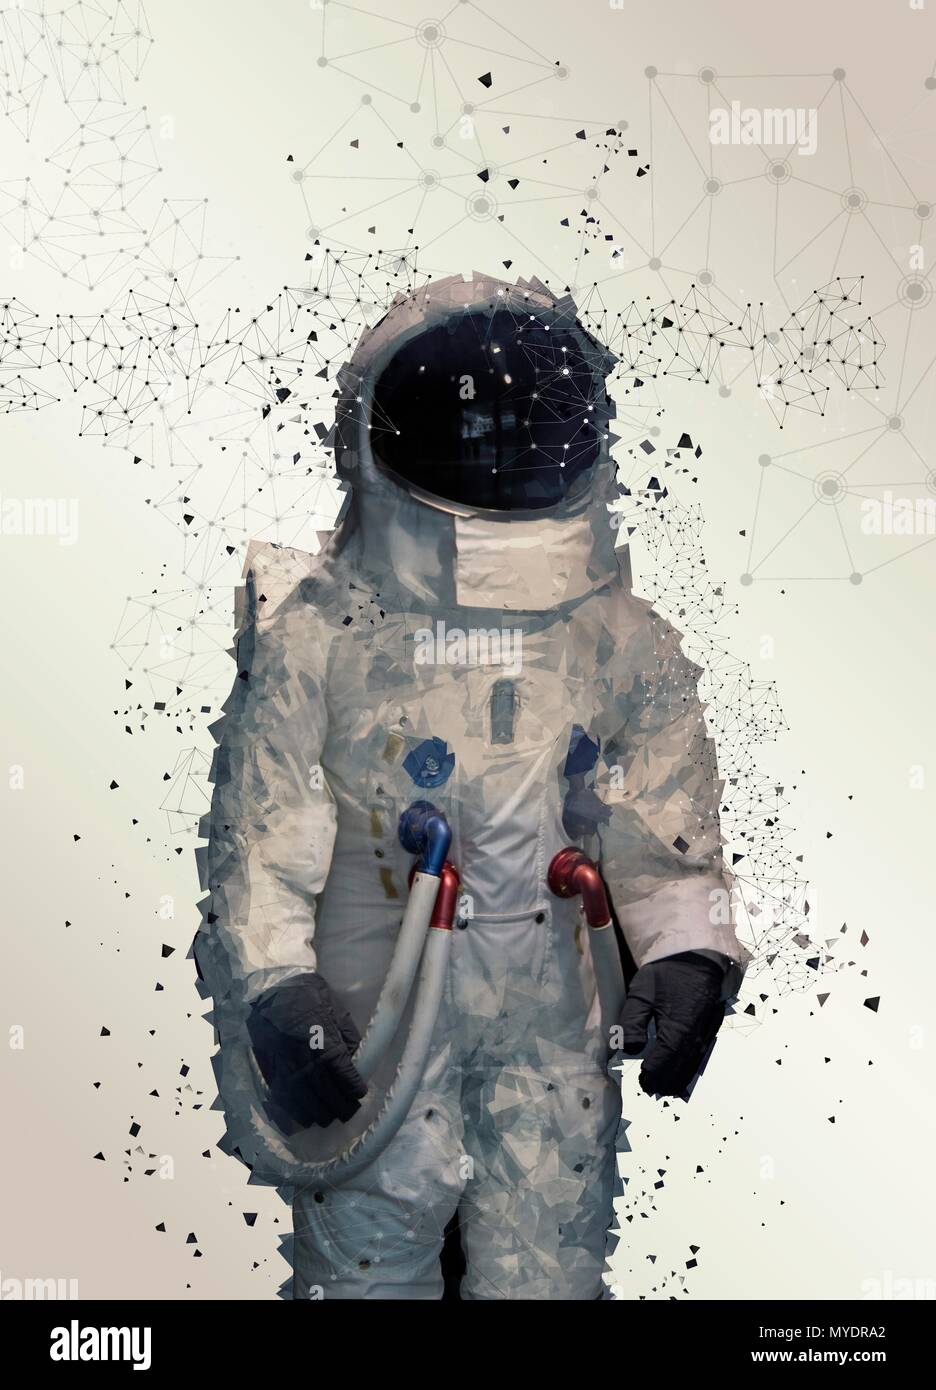 Astronaut in space suit, illustration. Stock Photo